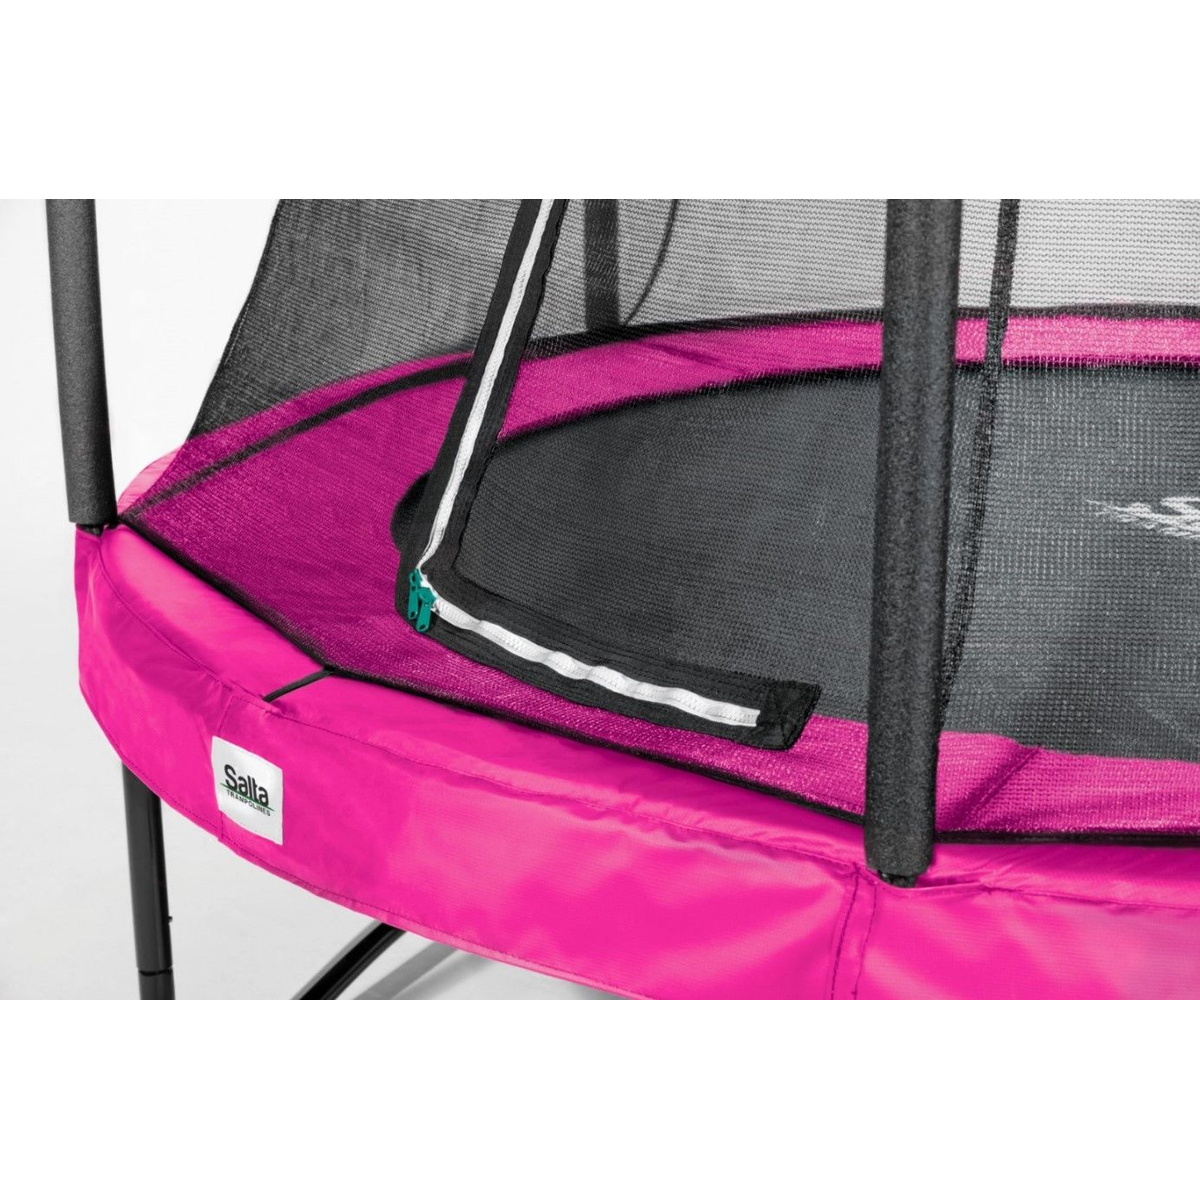 Salta Comfort Edition 251 Roze Trampoline + Veiligheidsnet